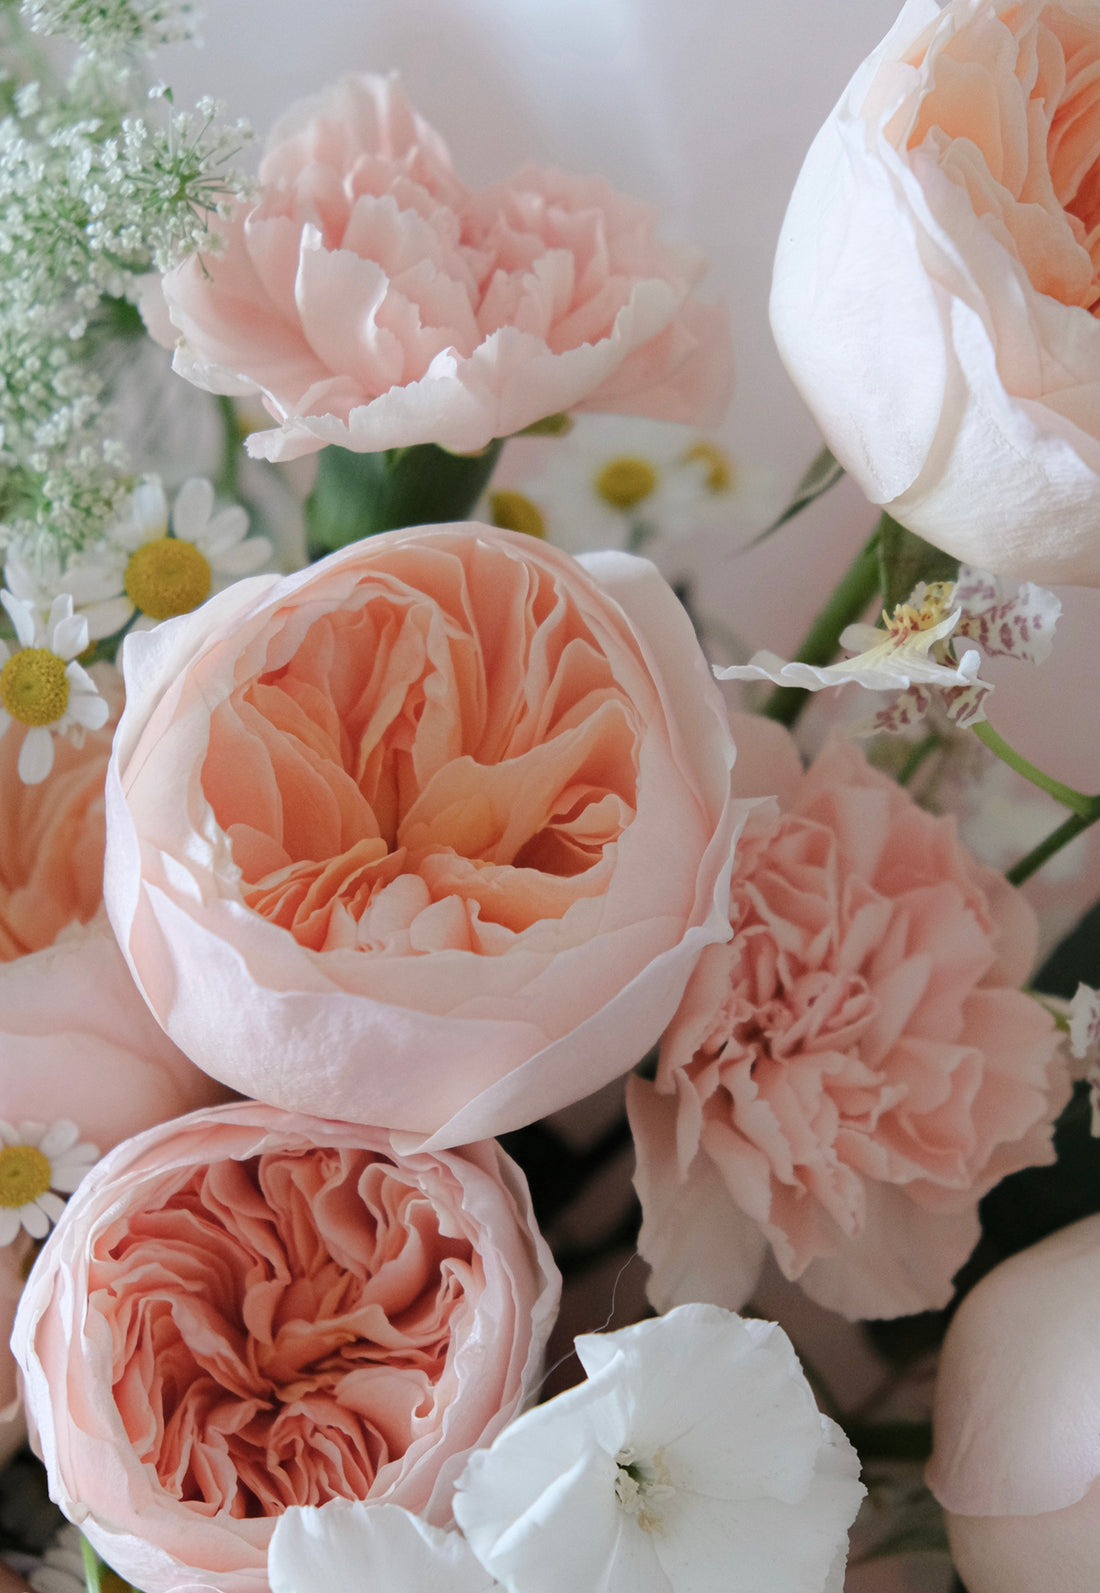 Garden rose bouquet (庭園玫瑰)